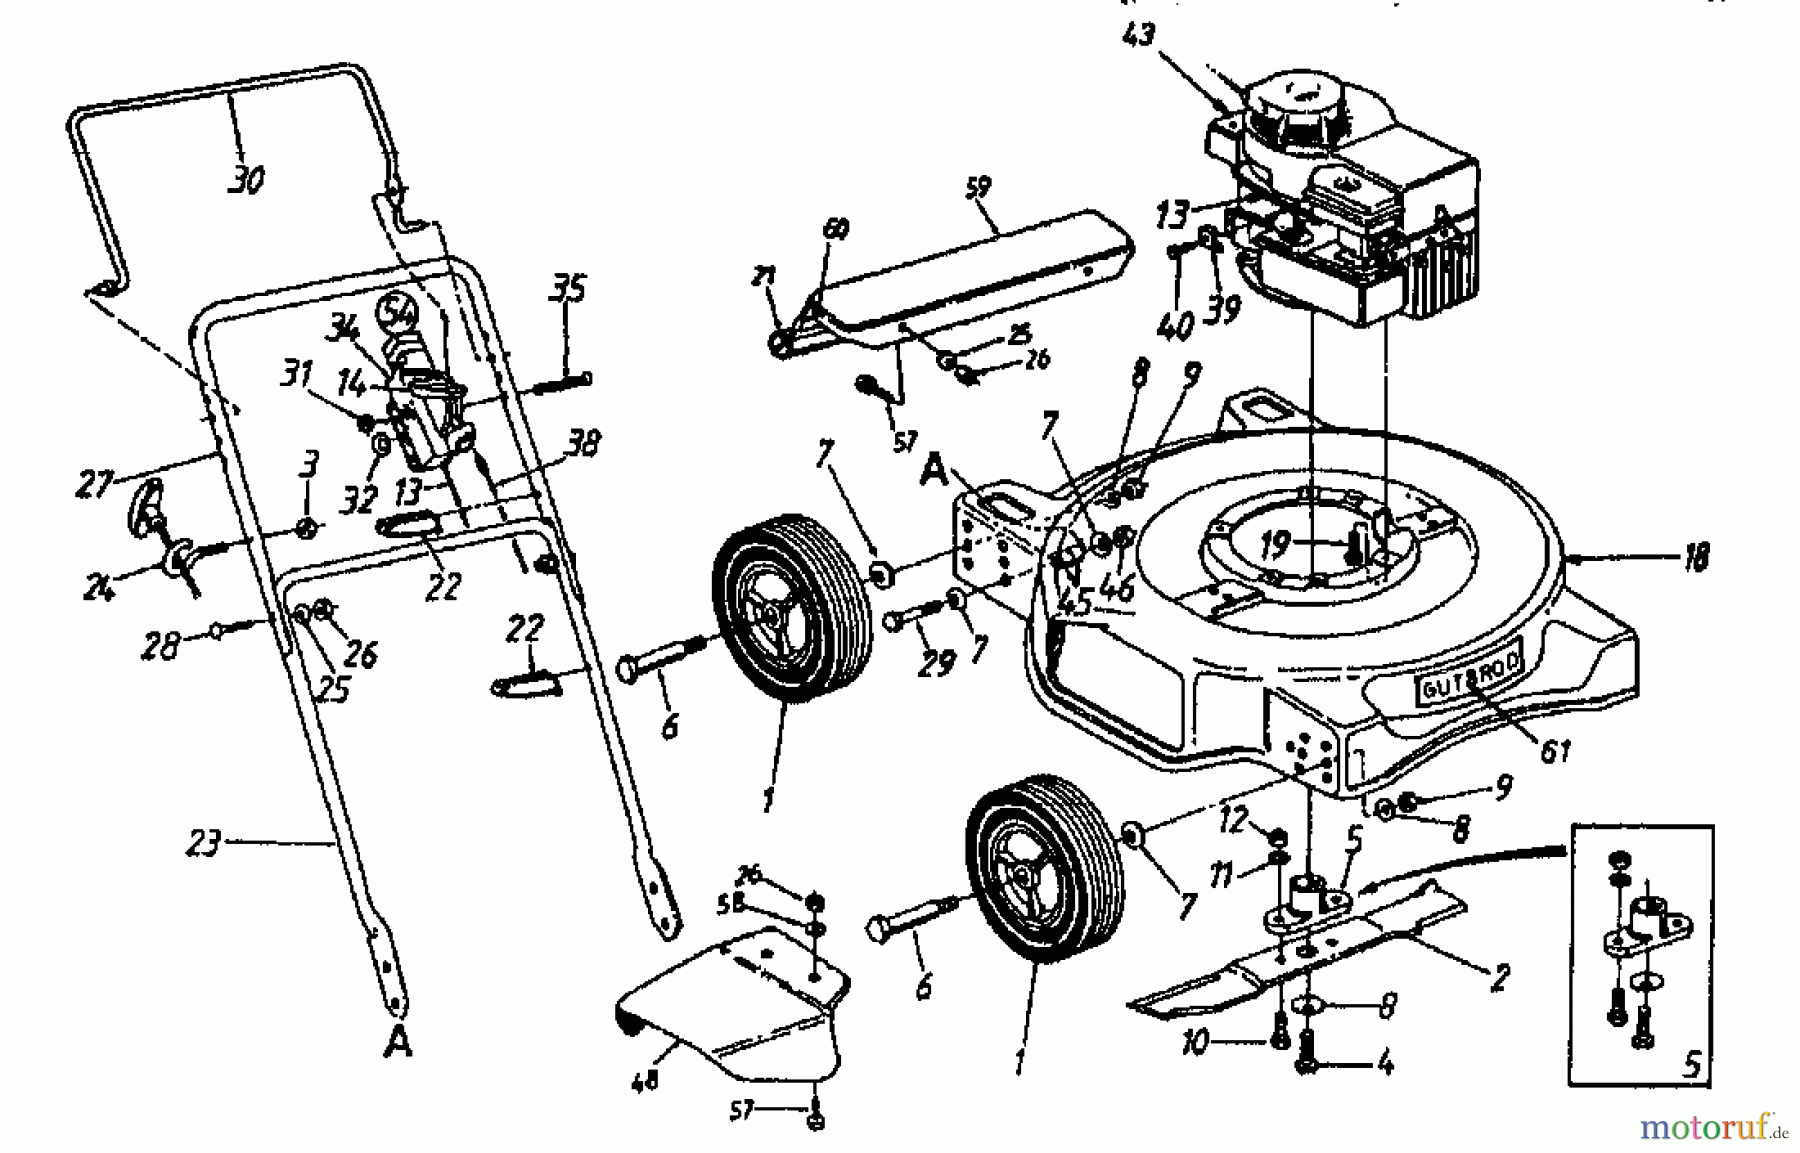  Gutbrod Petrol mower 51 S 04045.02  (1996) Basic machine